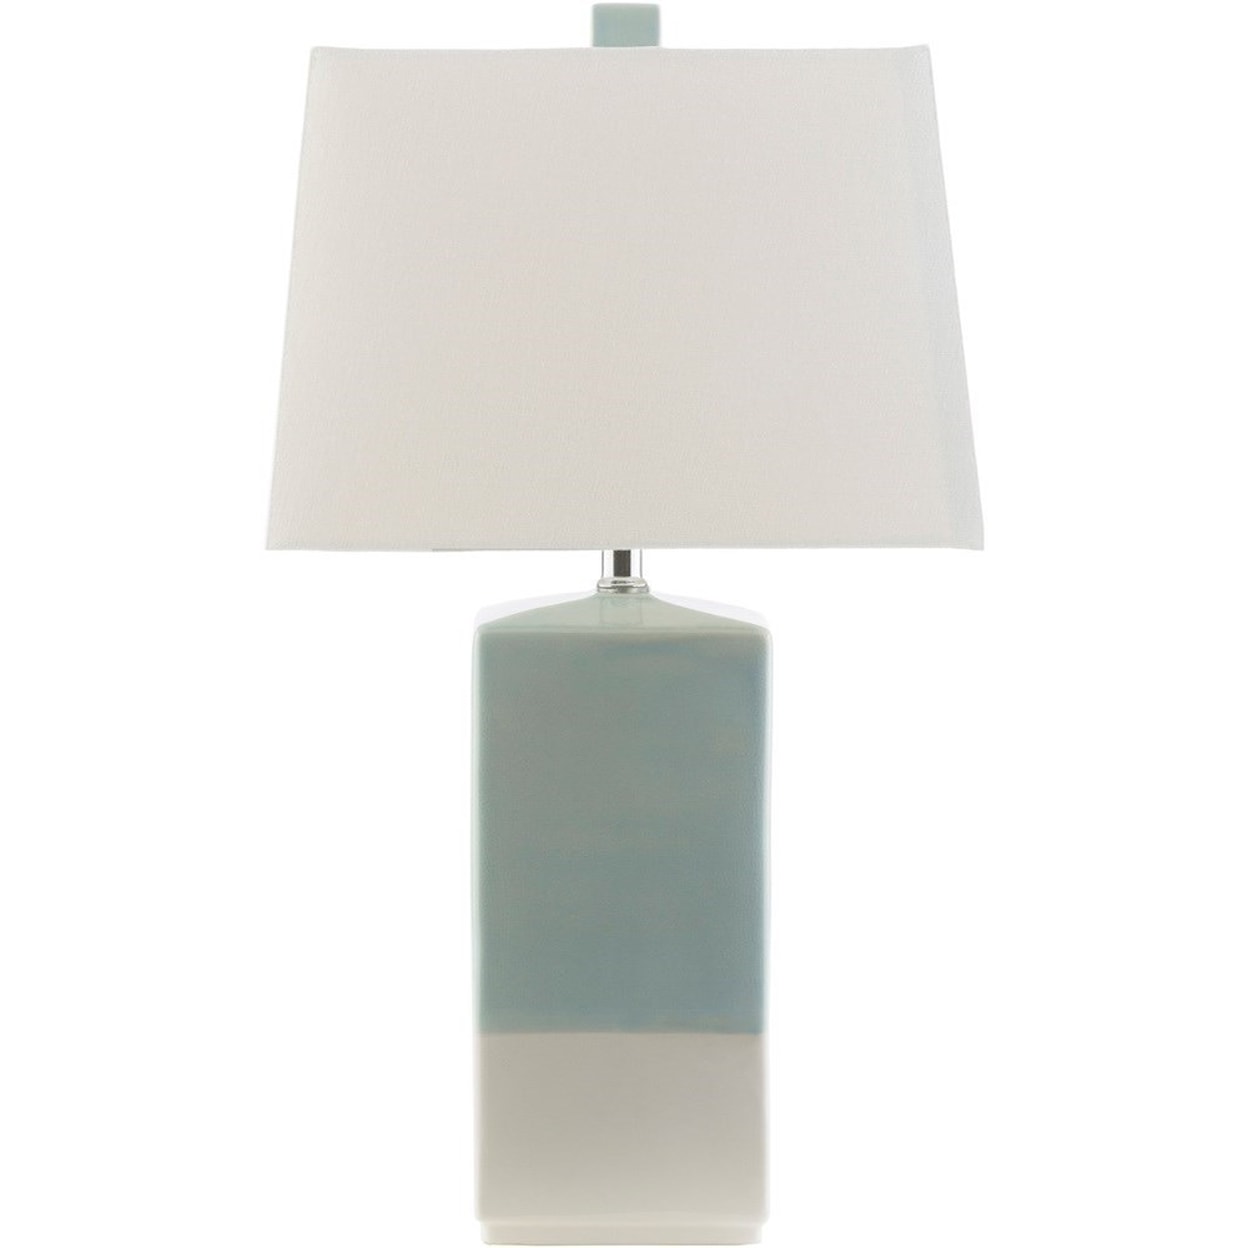 Carolina Rugs Malloy Blue / White Coastal Table Lamp